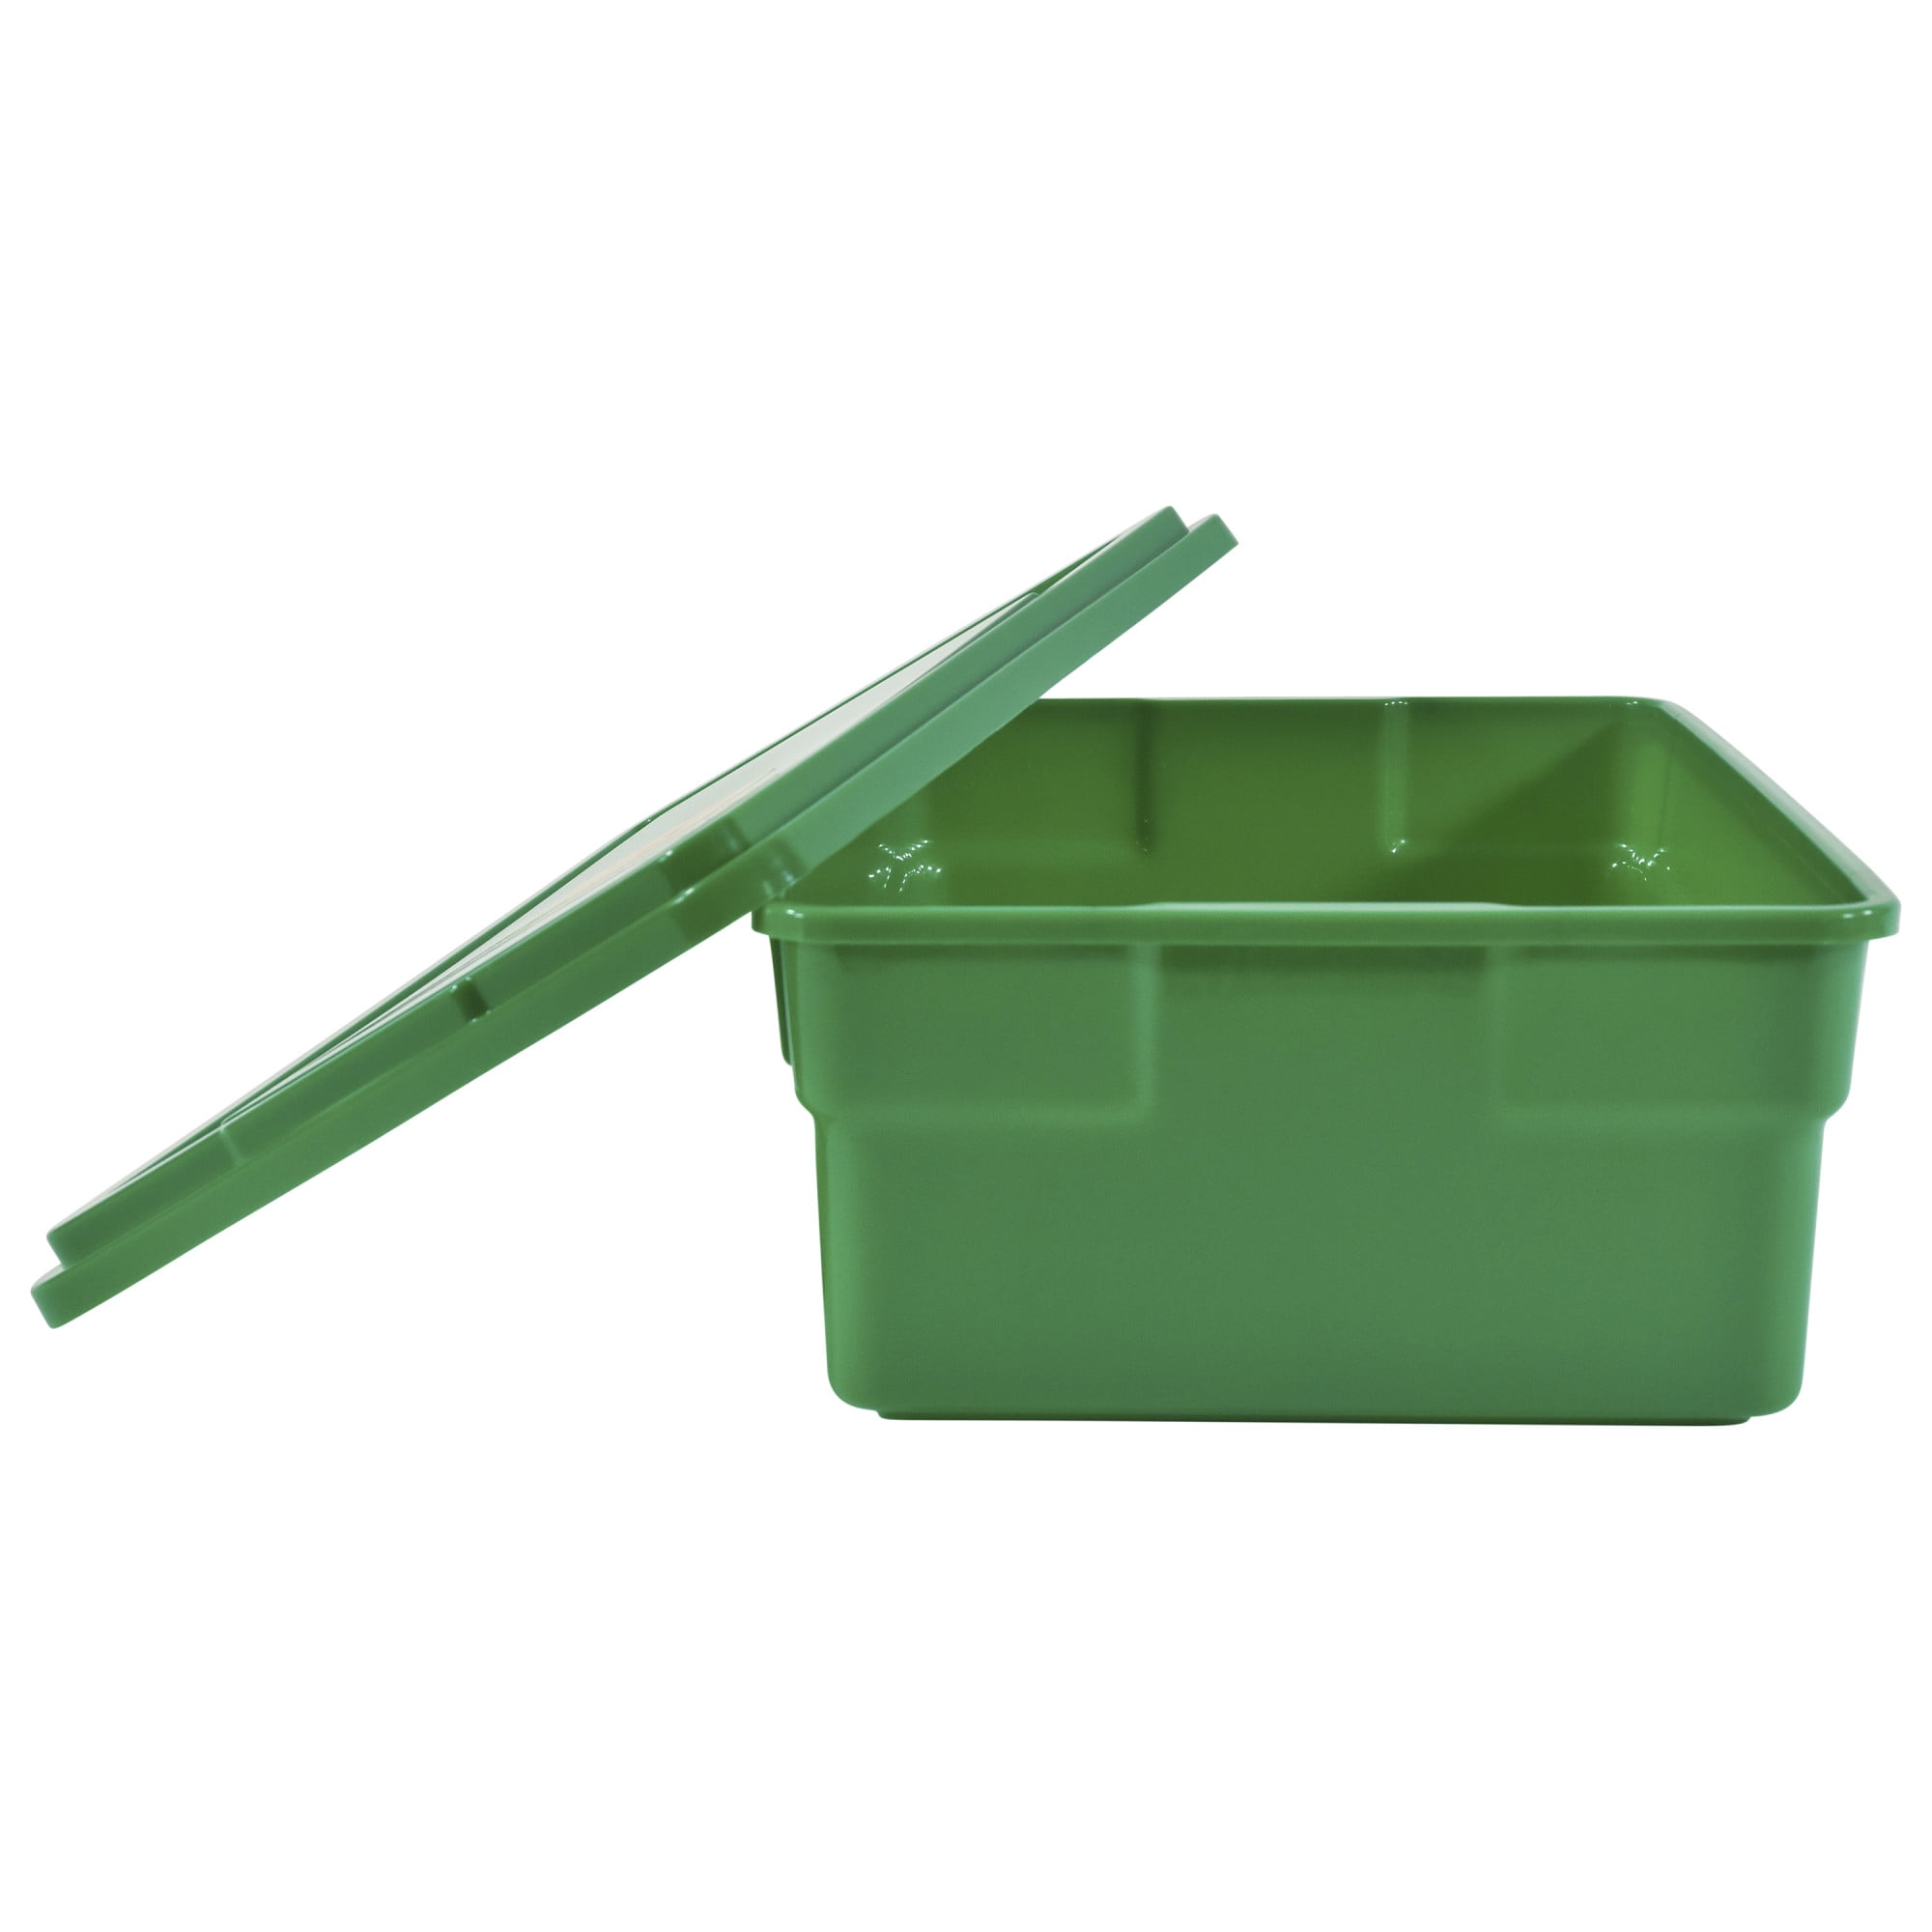 Storex Classroom Storage Bin, 16-3/4 x 11-7/8 x 8-1/4 Inches, Green, Pack  of 6